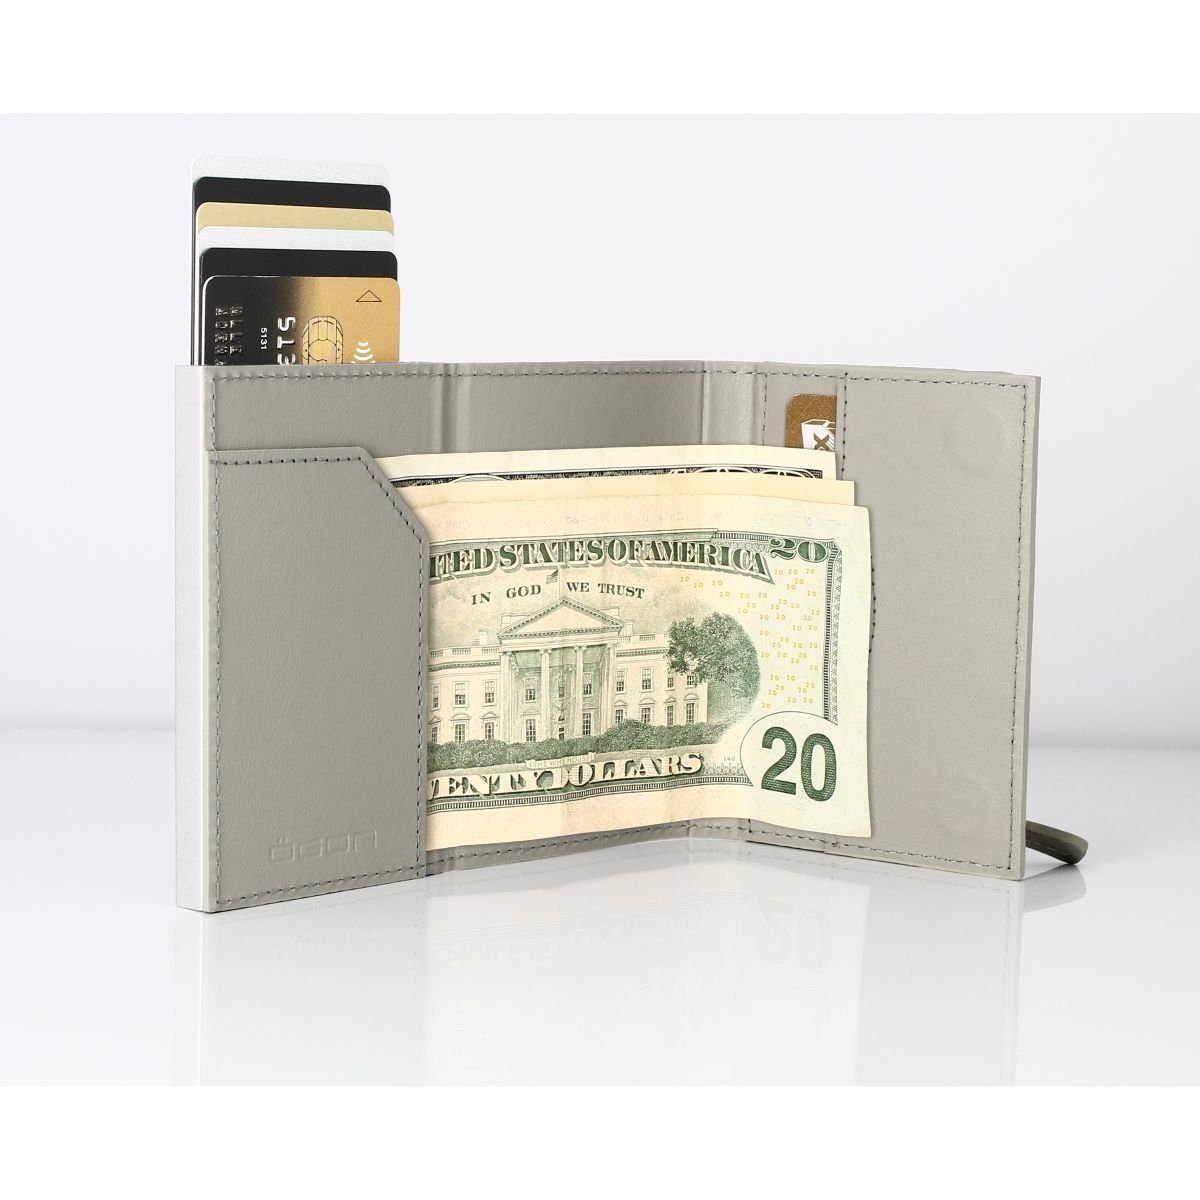 OGON Cascade Card Case Wallet With Zipper - Blaster